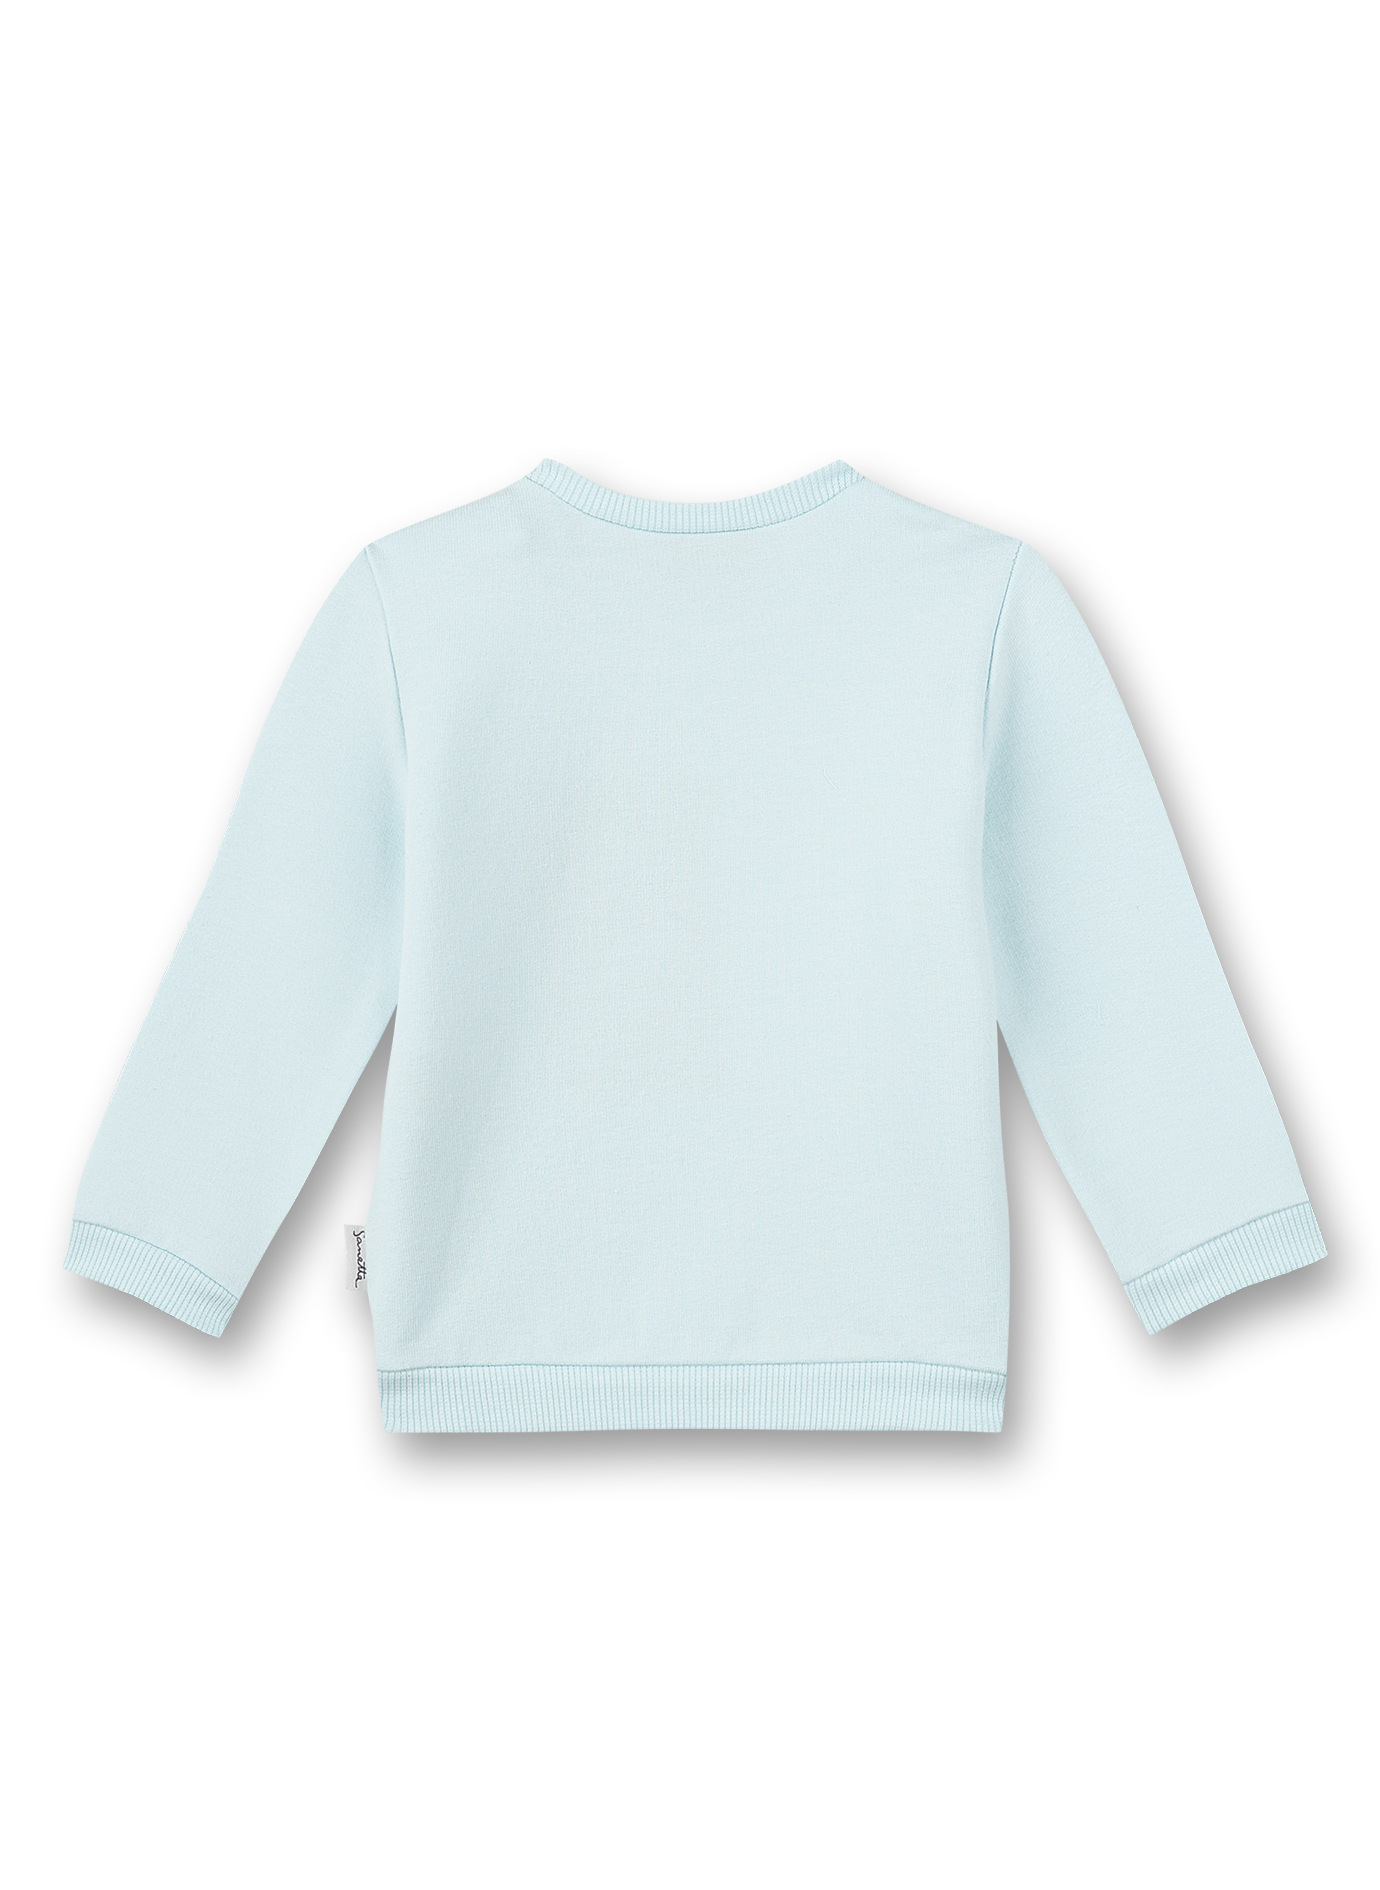 Mädchen-Sweatshirt Hellblau Kangaroo